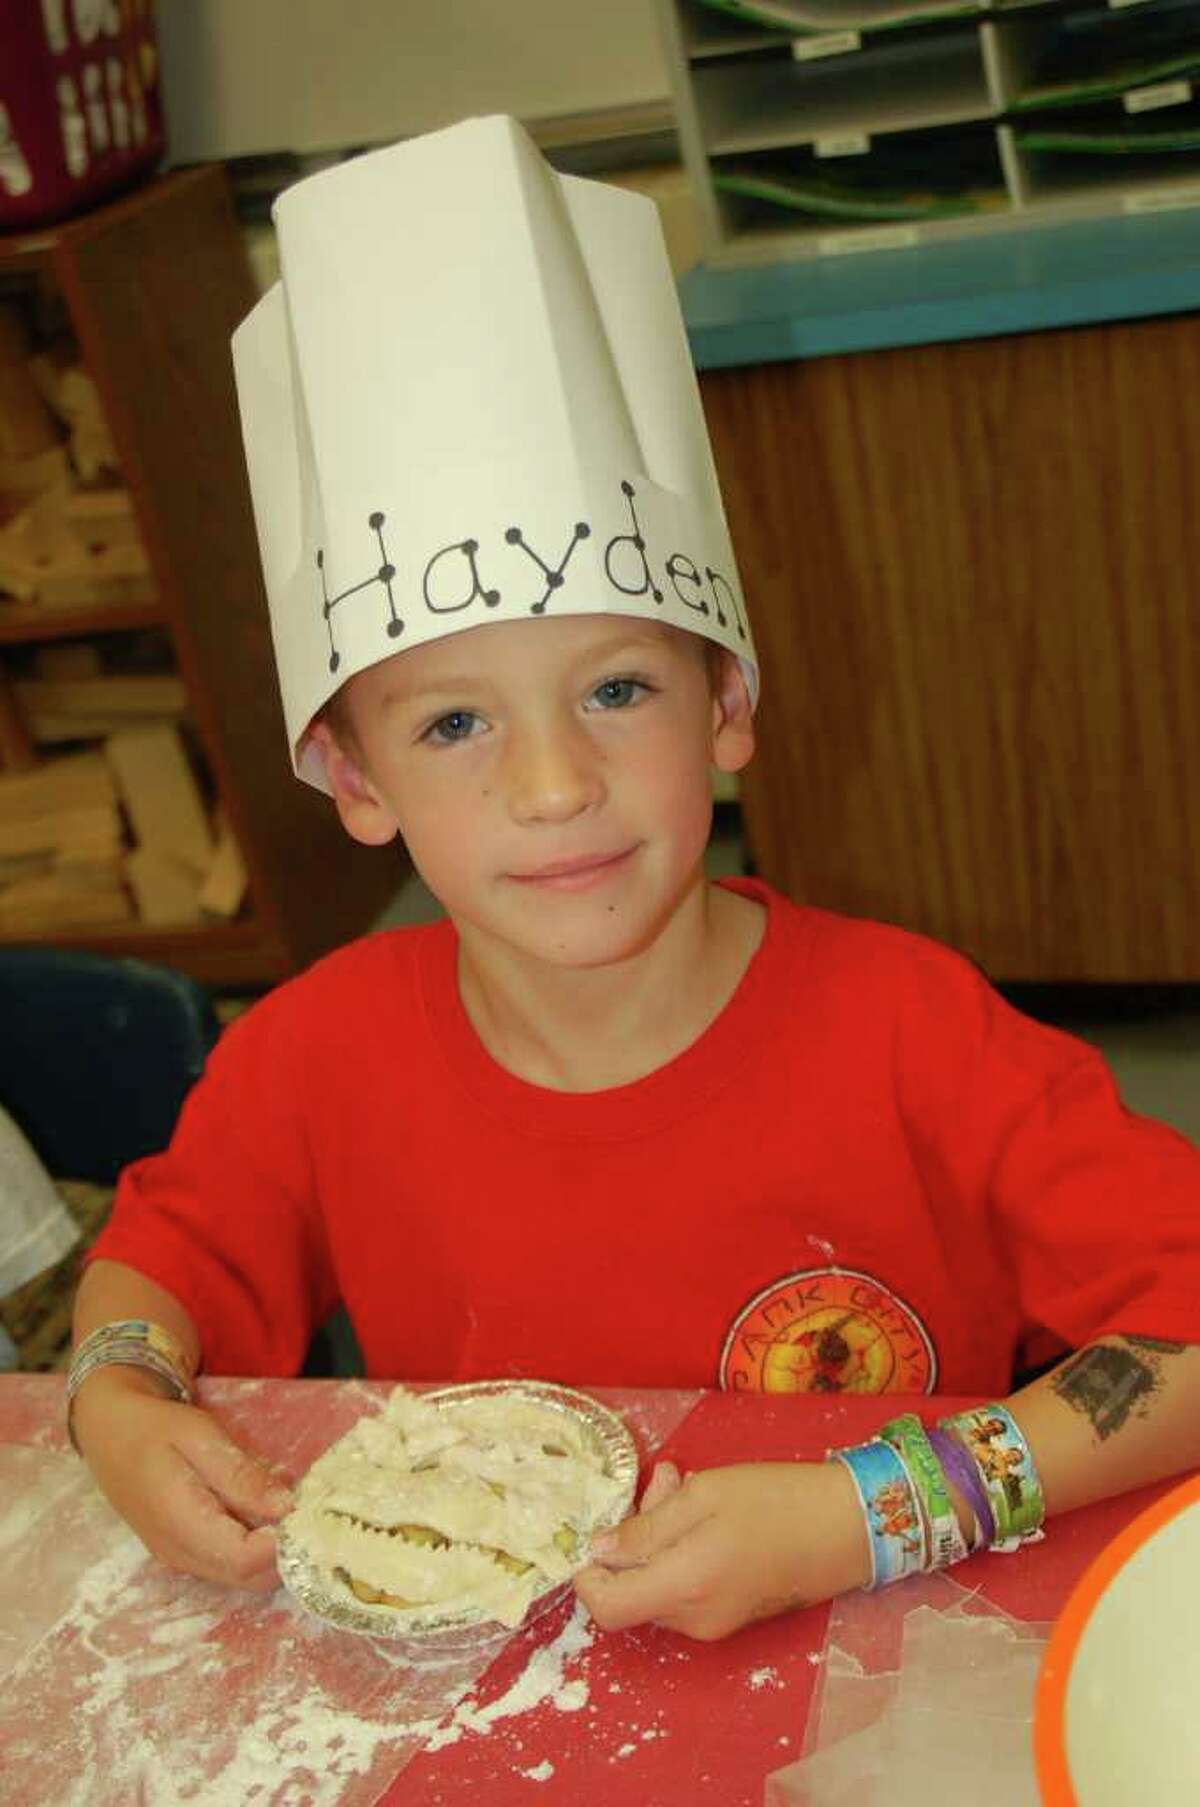 Hayden Shea shows off his baking talents.